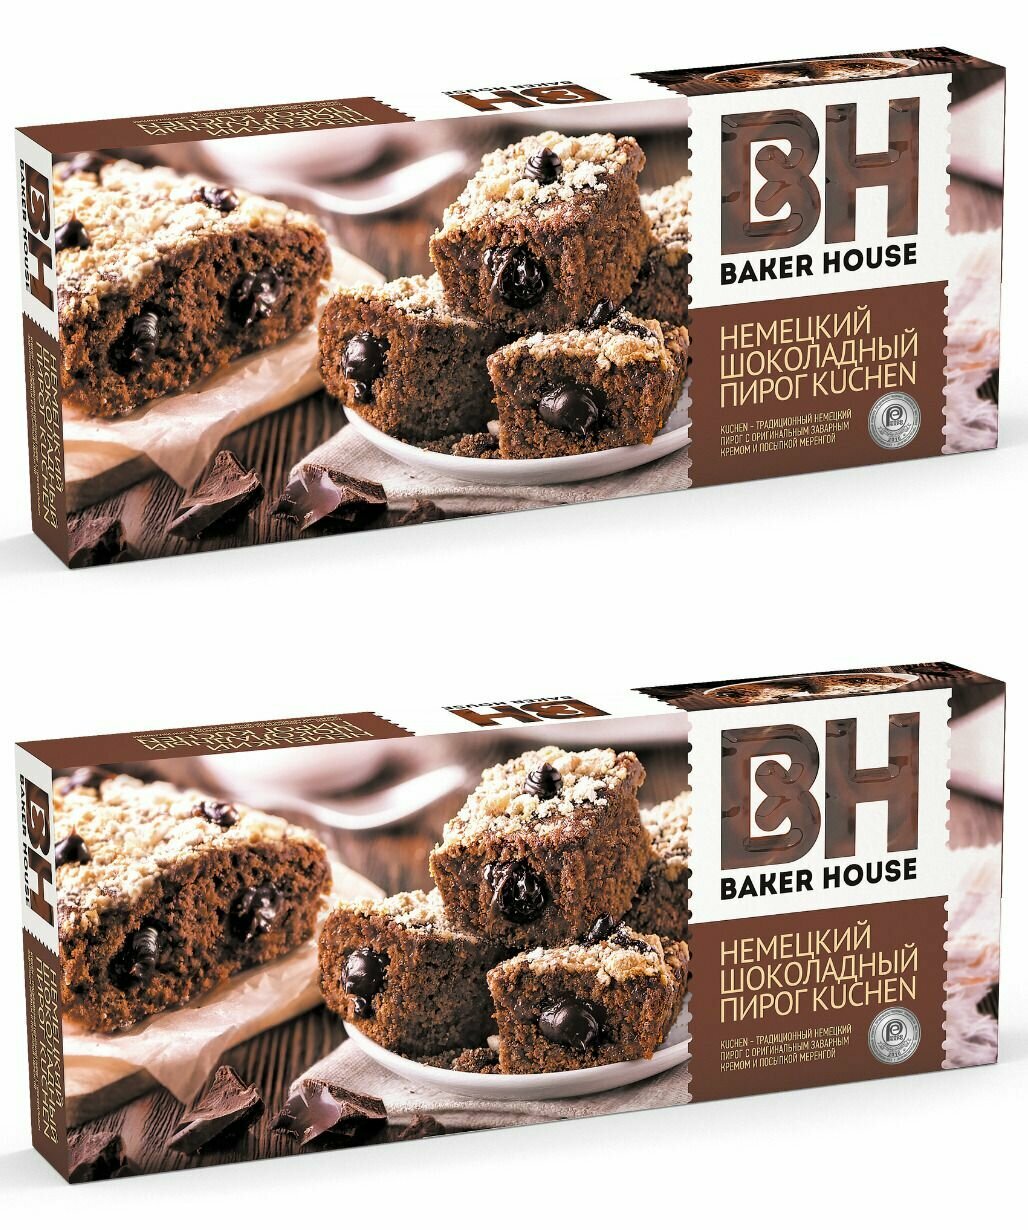 Baker House Пирог Kuchen Шоколадный бисквитный, 350 г, 2 уп